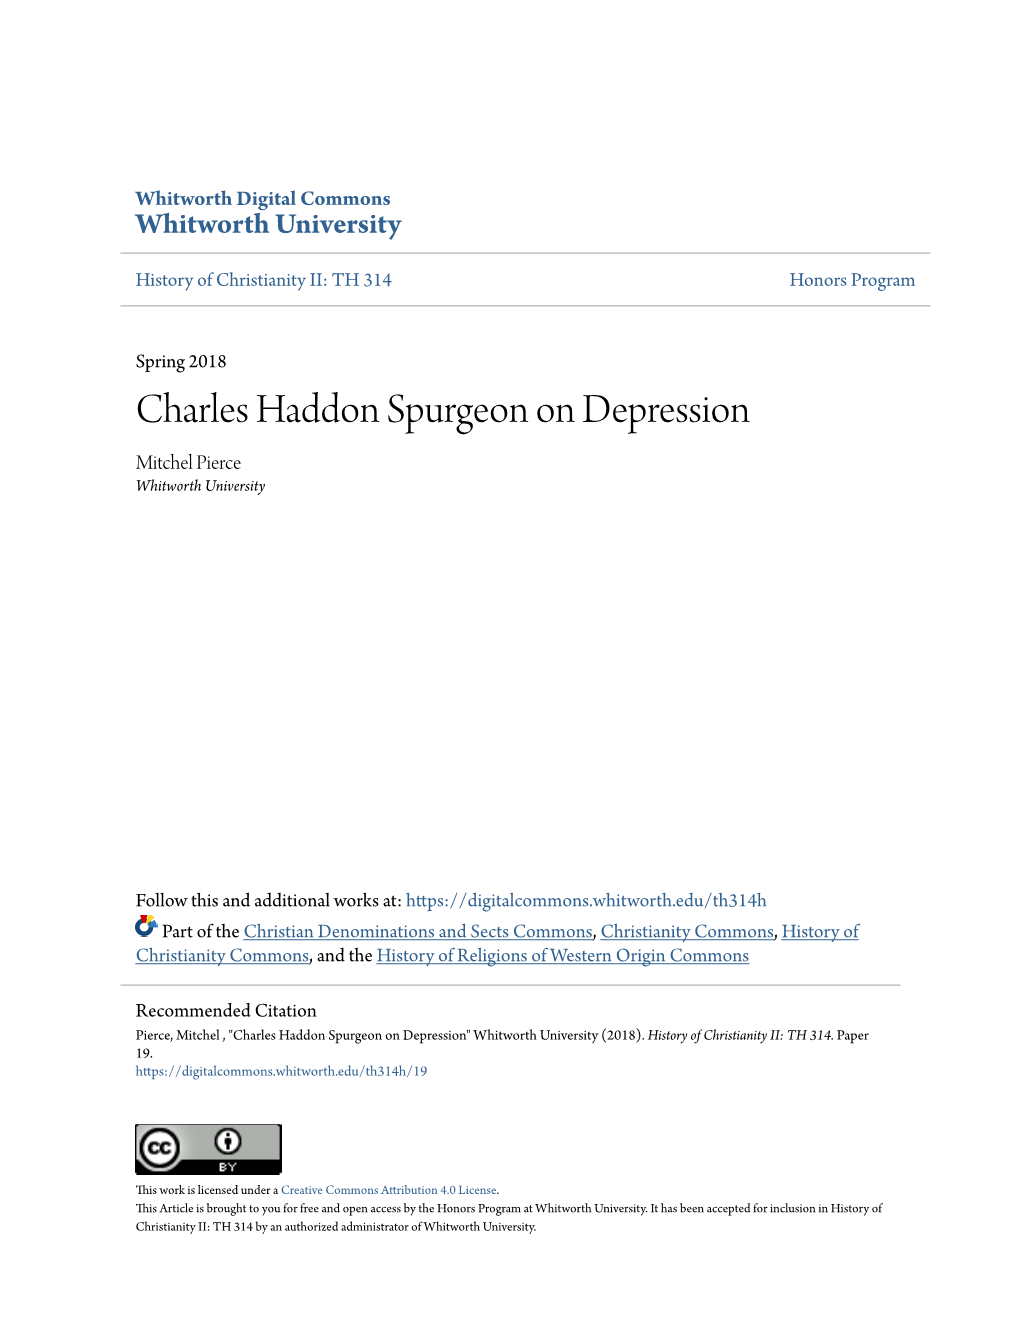 Charles Haddon Spurgeon on Depression Mitchel Pierce Whitworth University